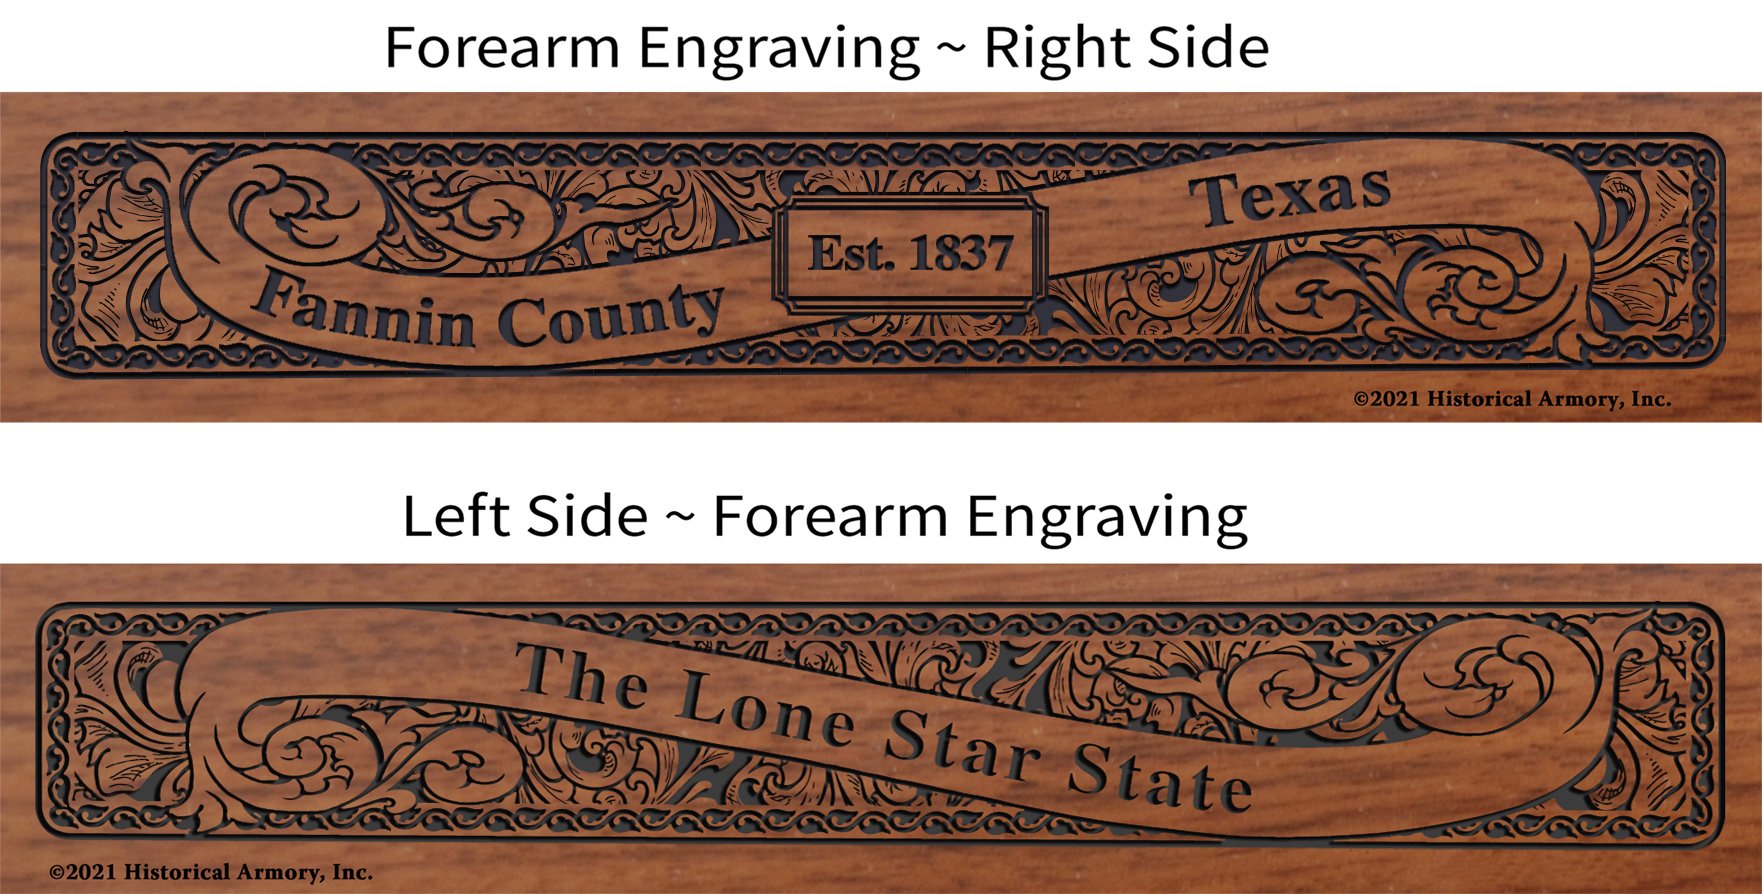 Fannin County Texas Establishment and Motto History Engraved Rifle Forearm